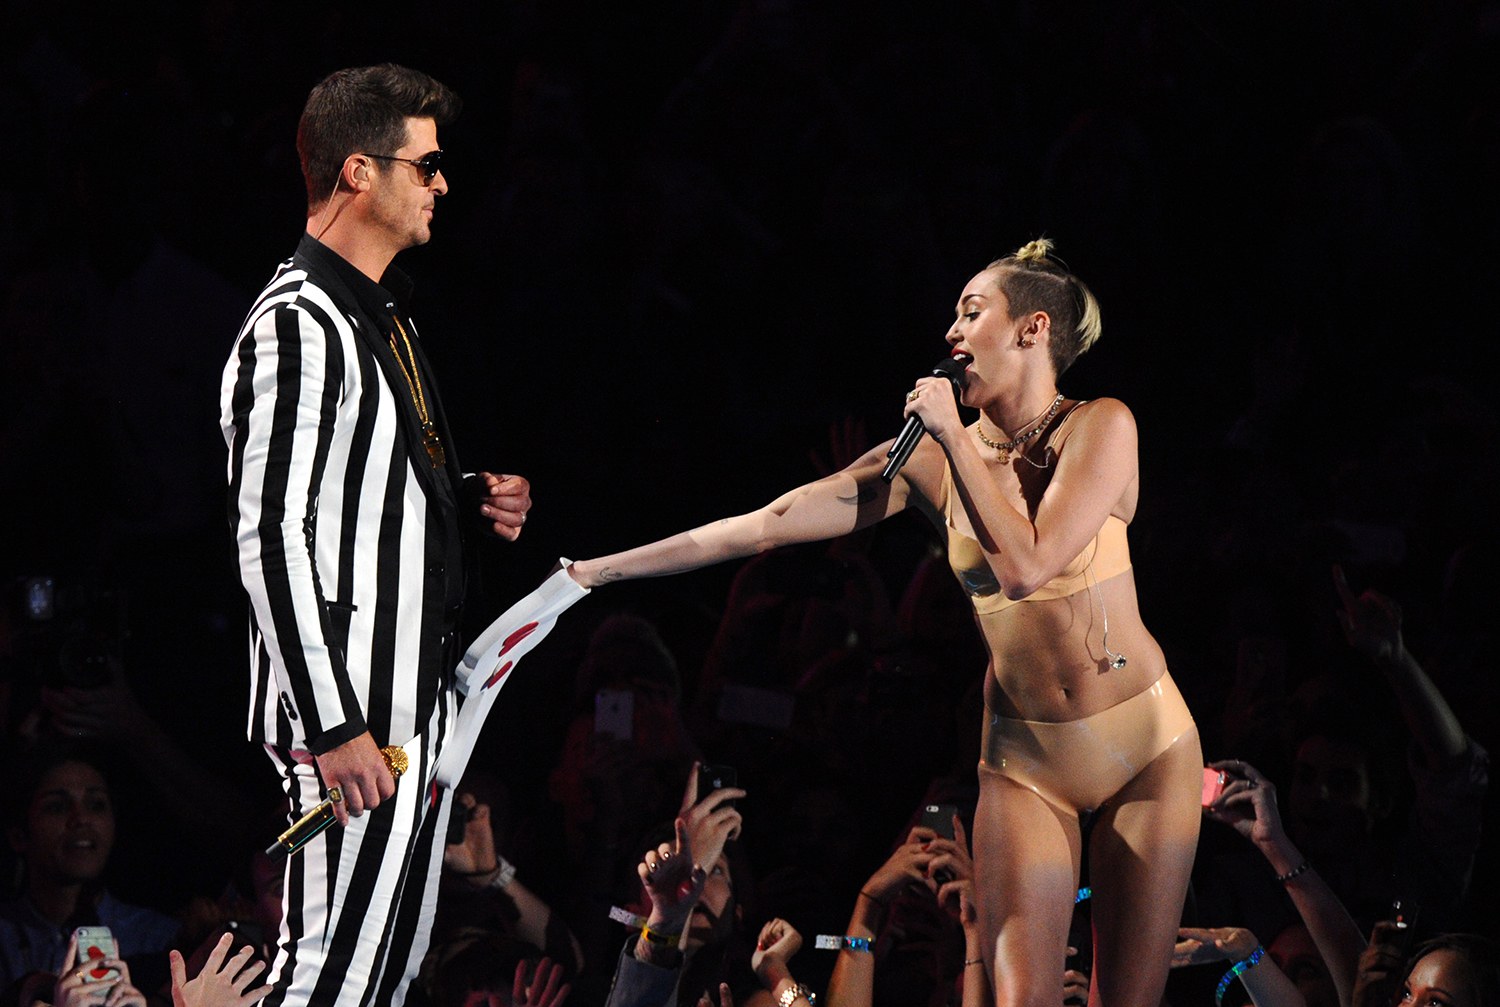 Miley Cyrus gets embarrassingly raunchy at the VMAs pic